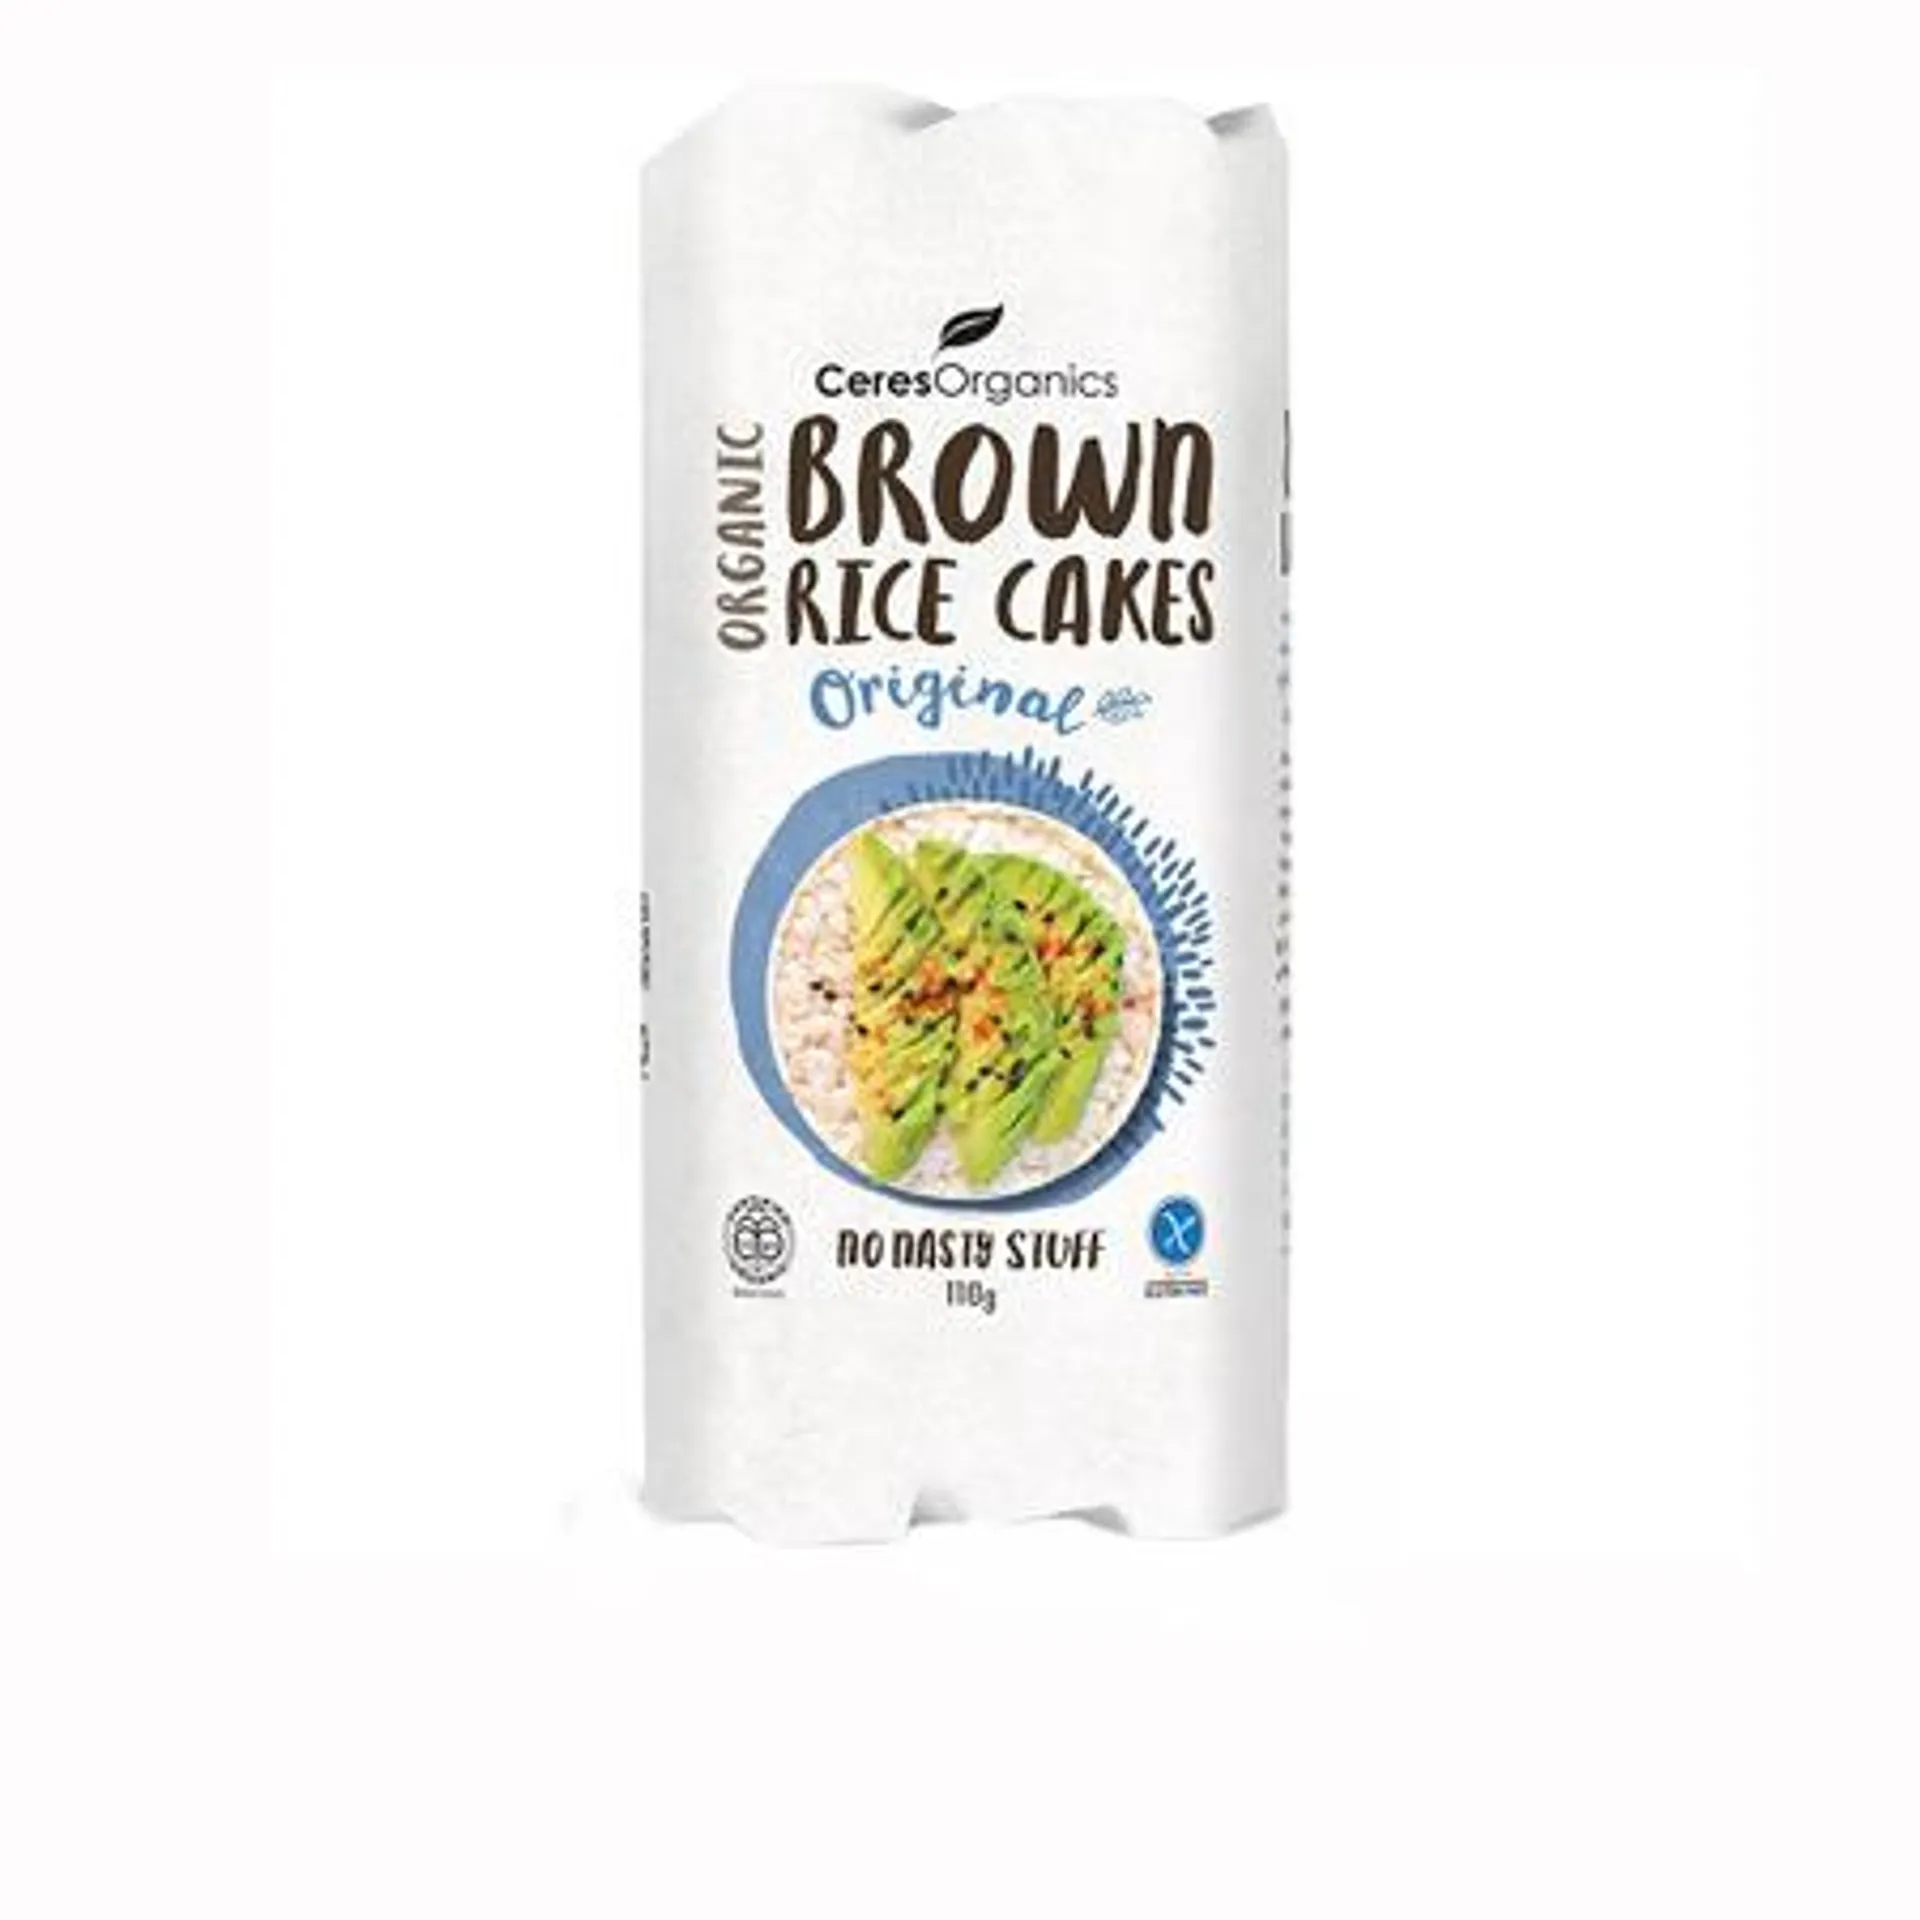 Ceres Organics Brown Rice Cakes